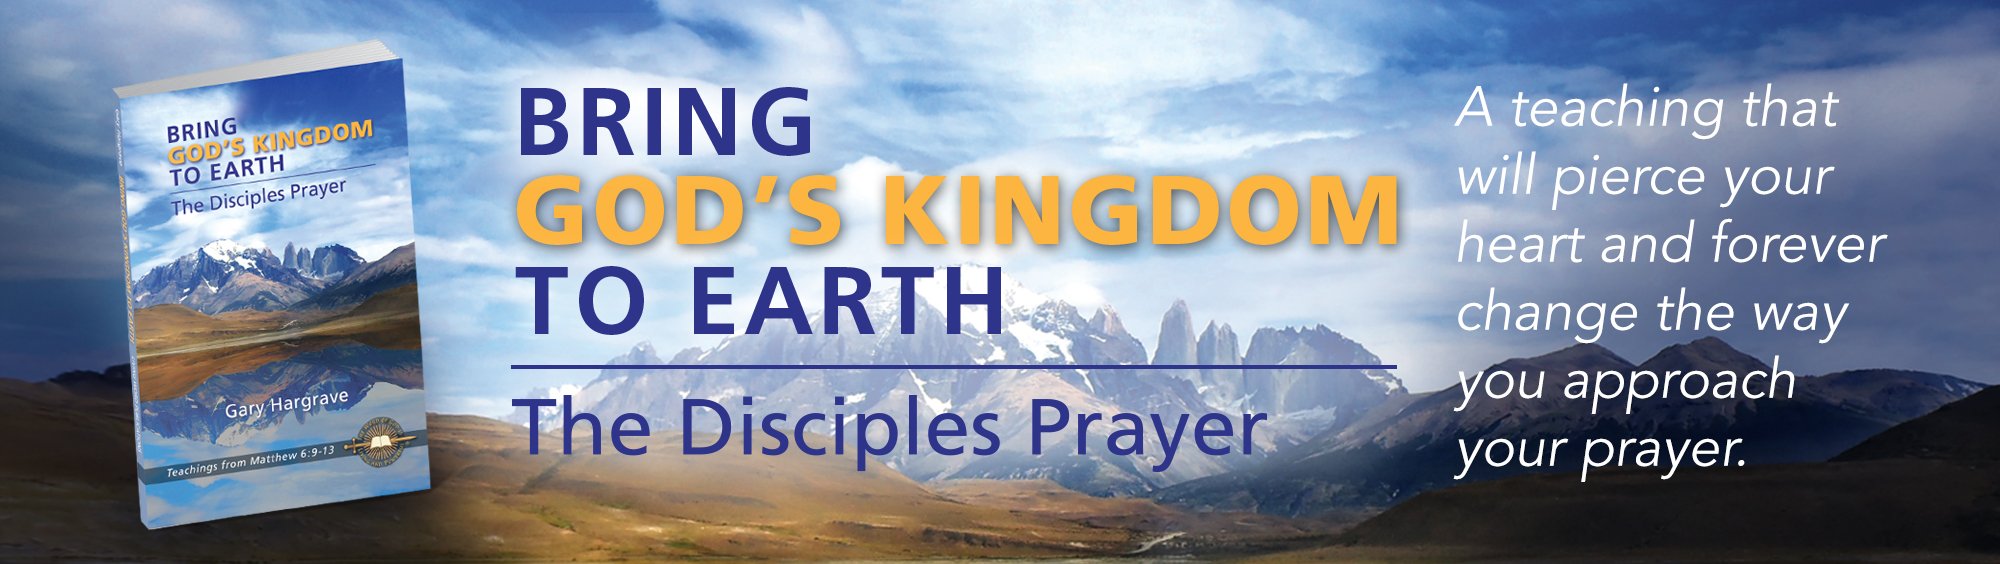  Bring God's Kingdom to Earth